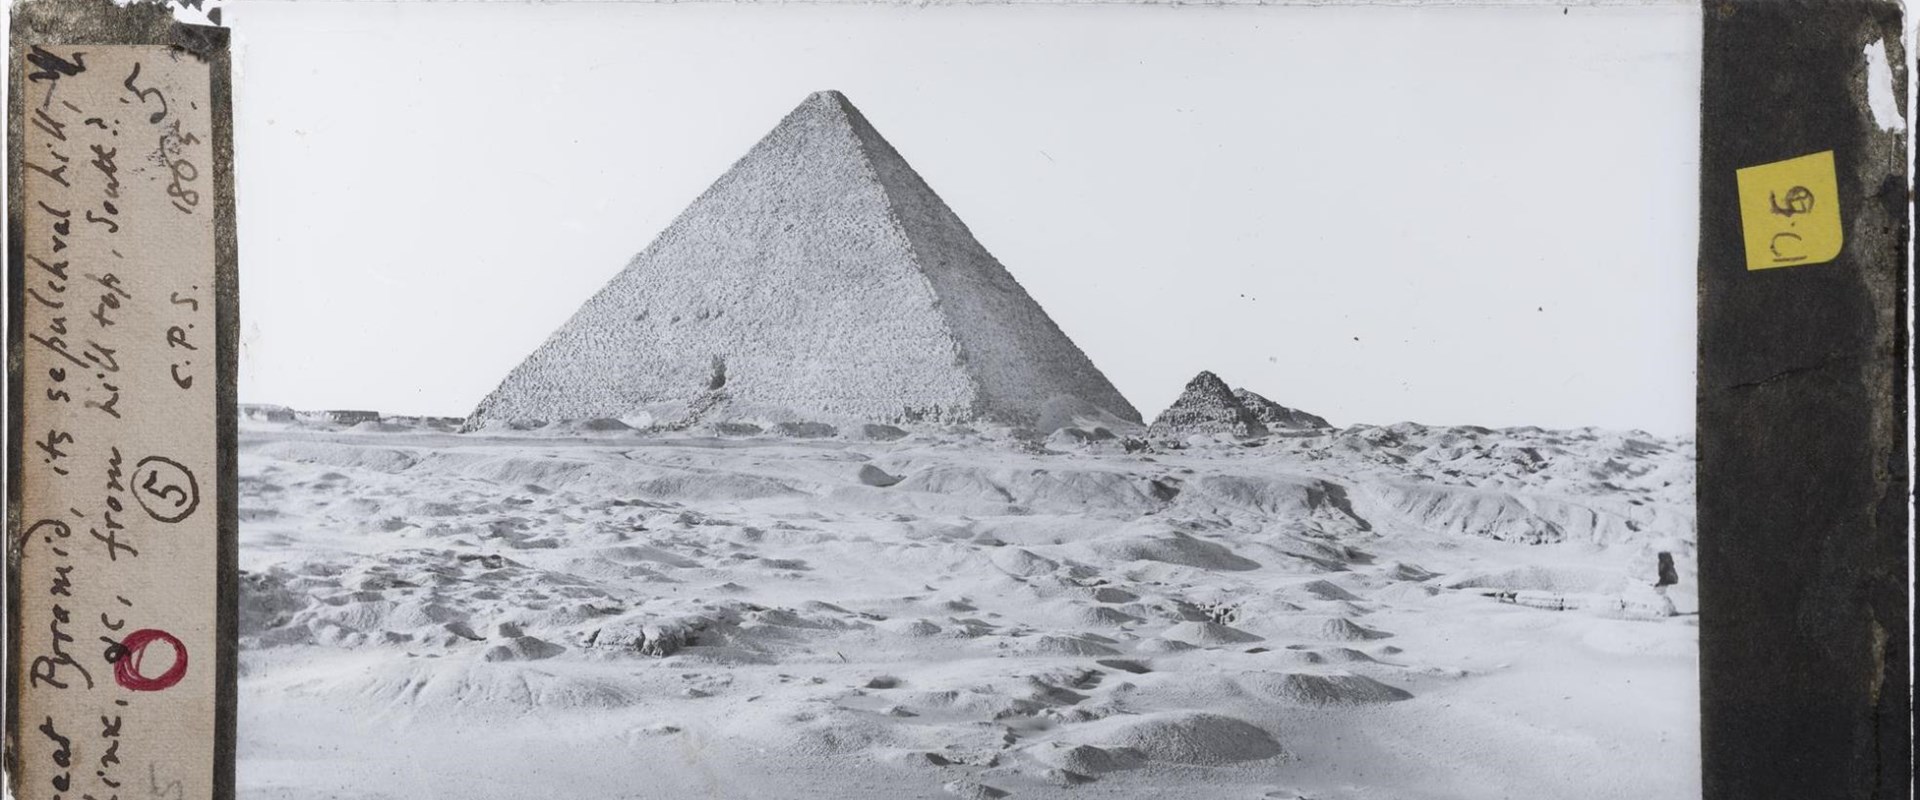 Pyramid Casing Stone - 